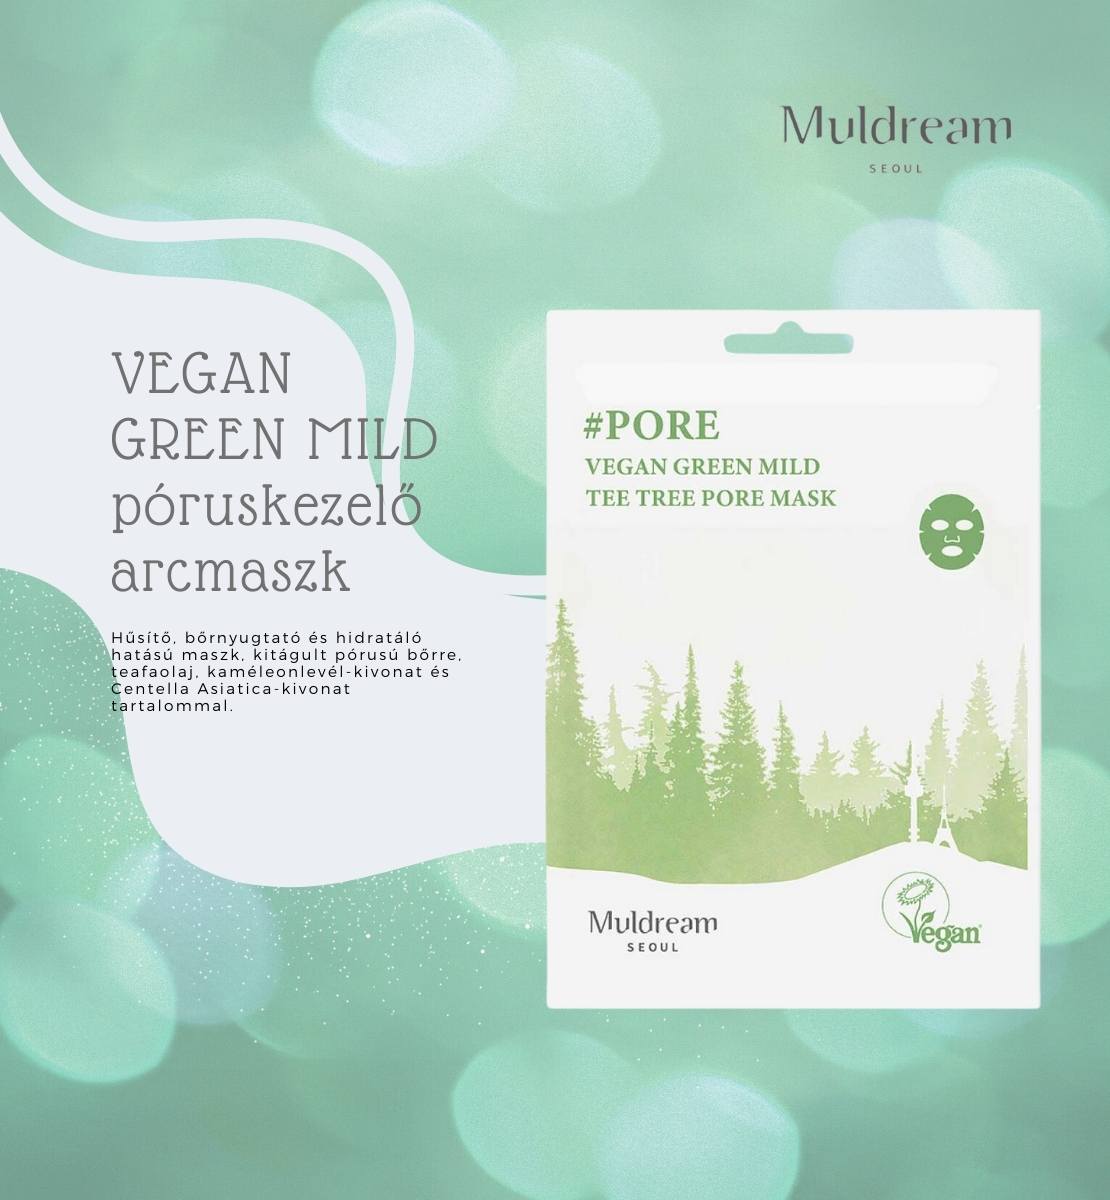 Muldream -vegan-green-mild-poruskezelo-arcmaszk-leiras